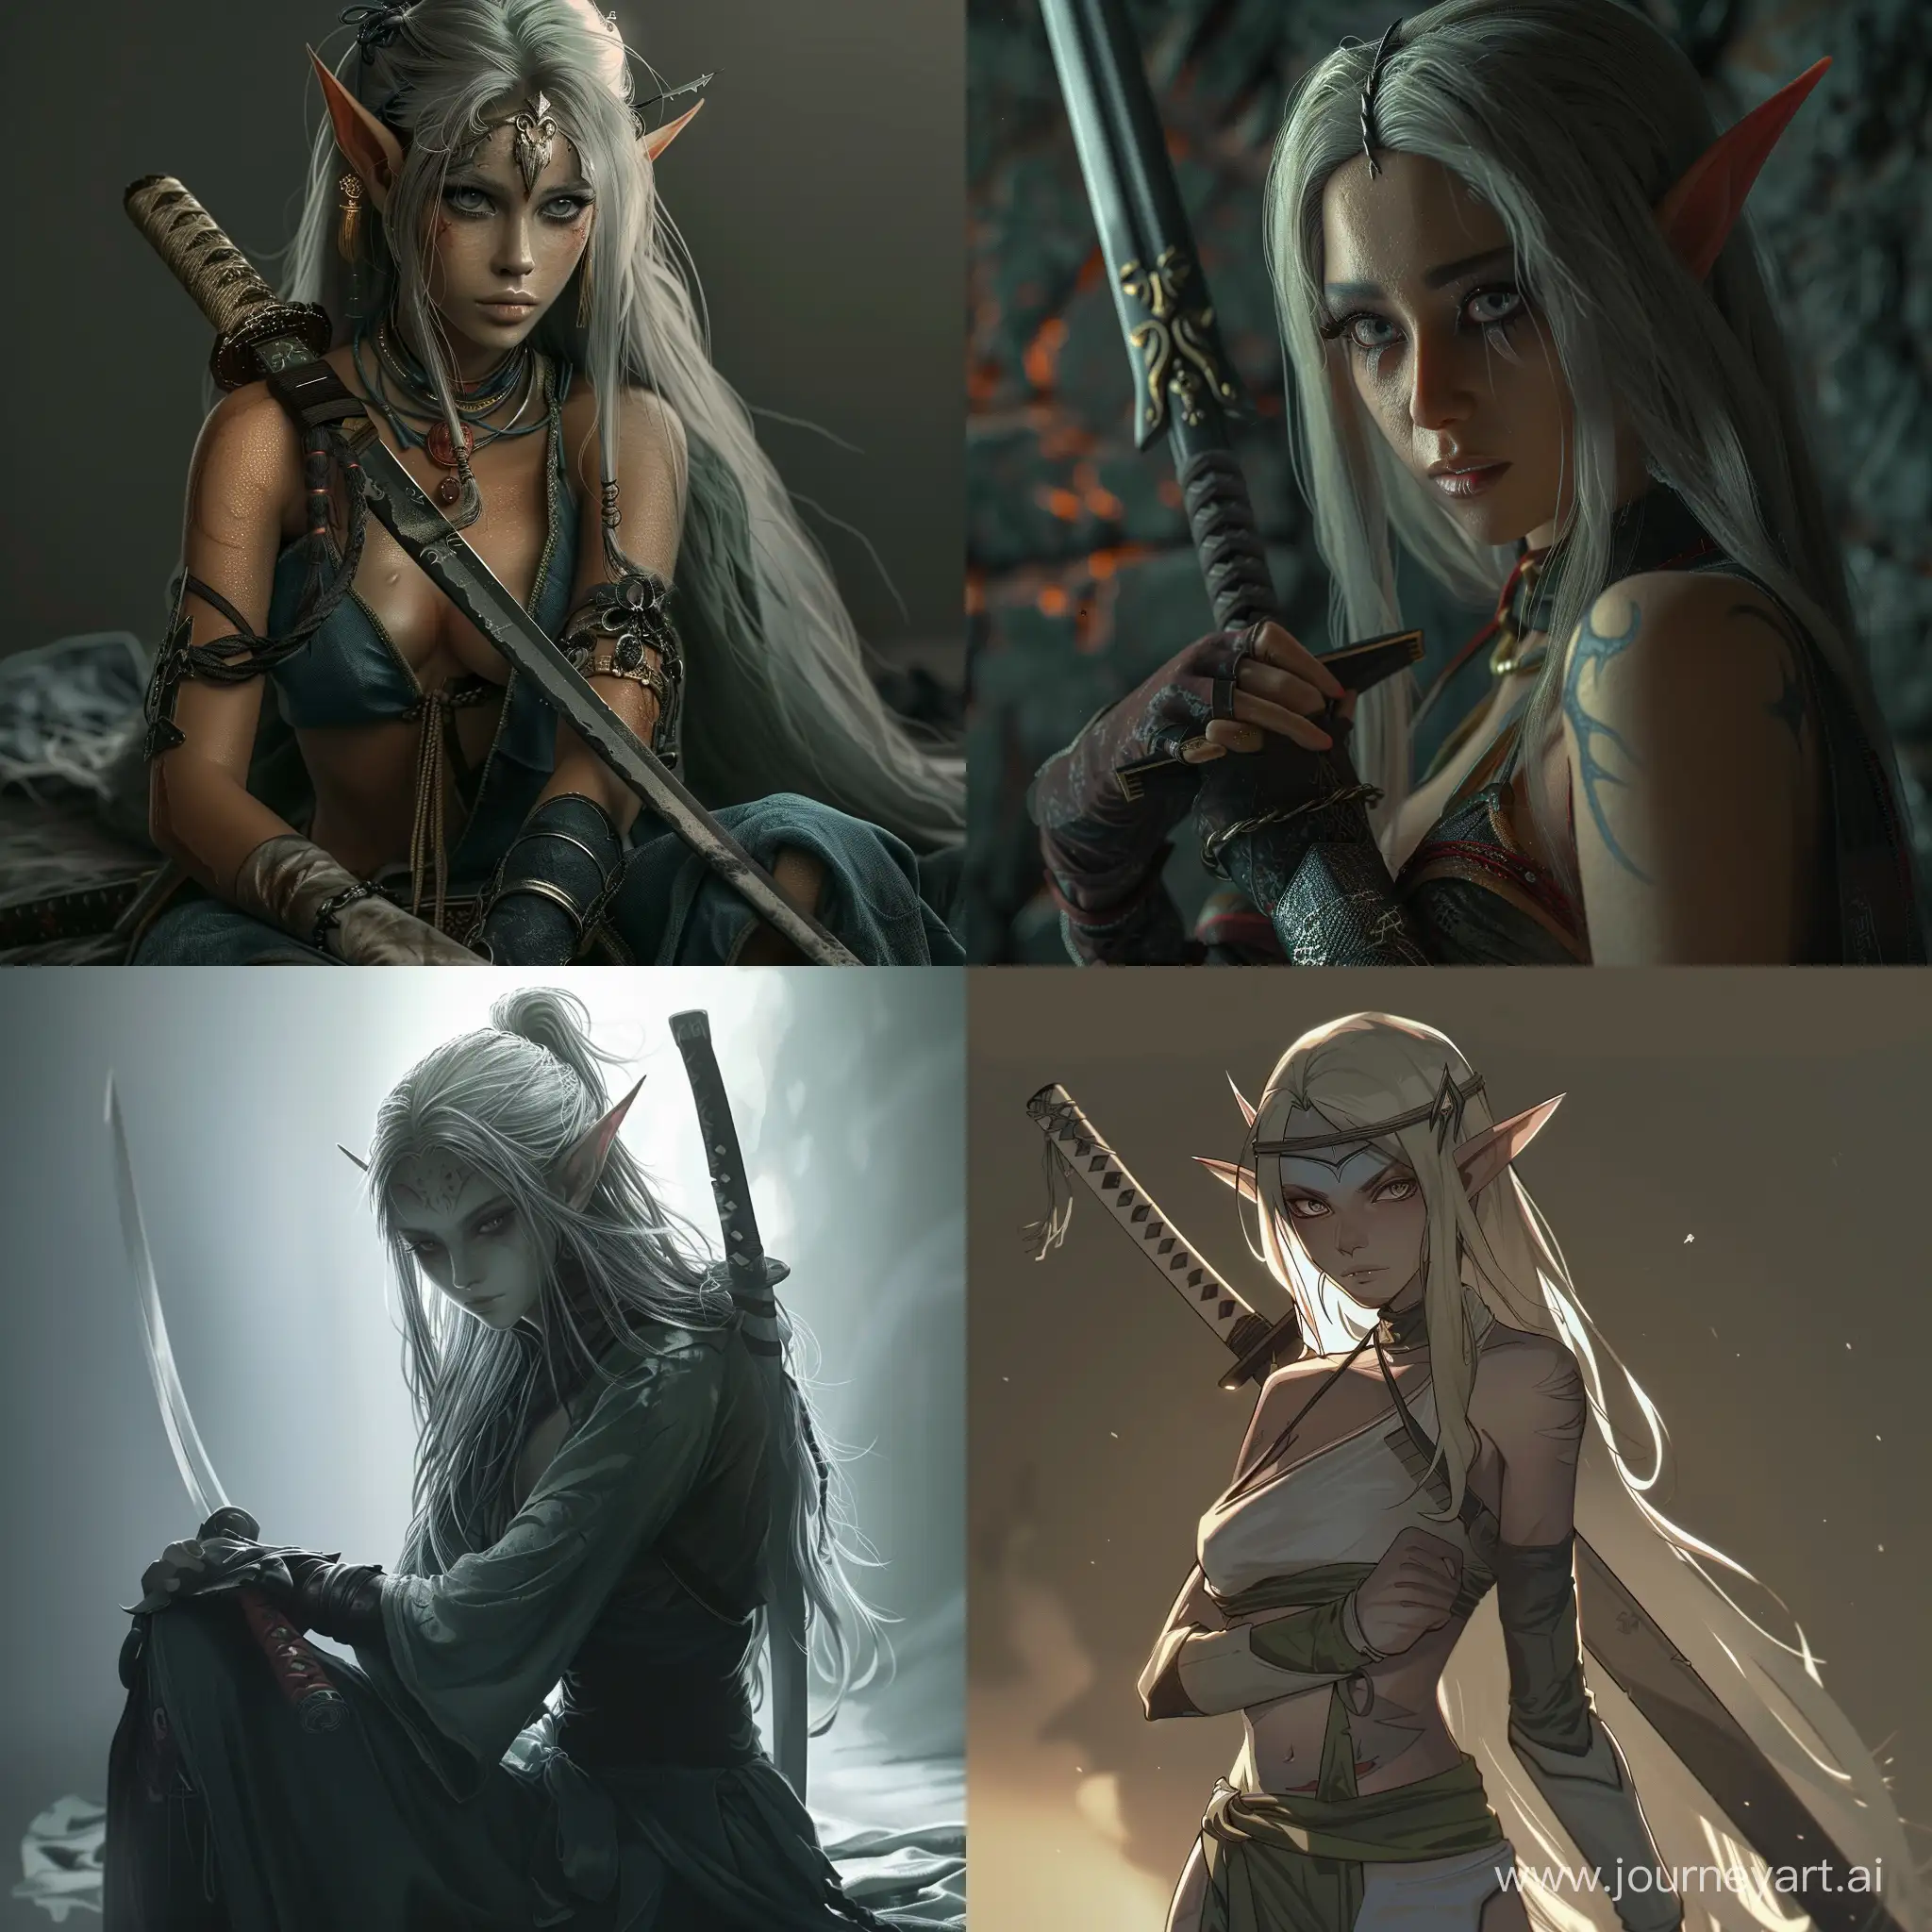 elven female, princess mononoke style, back hair, grey eyes, with a katana, Full Body View, Soft lighting